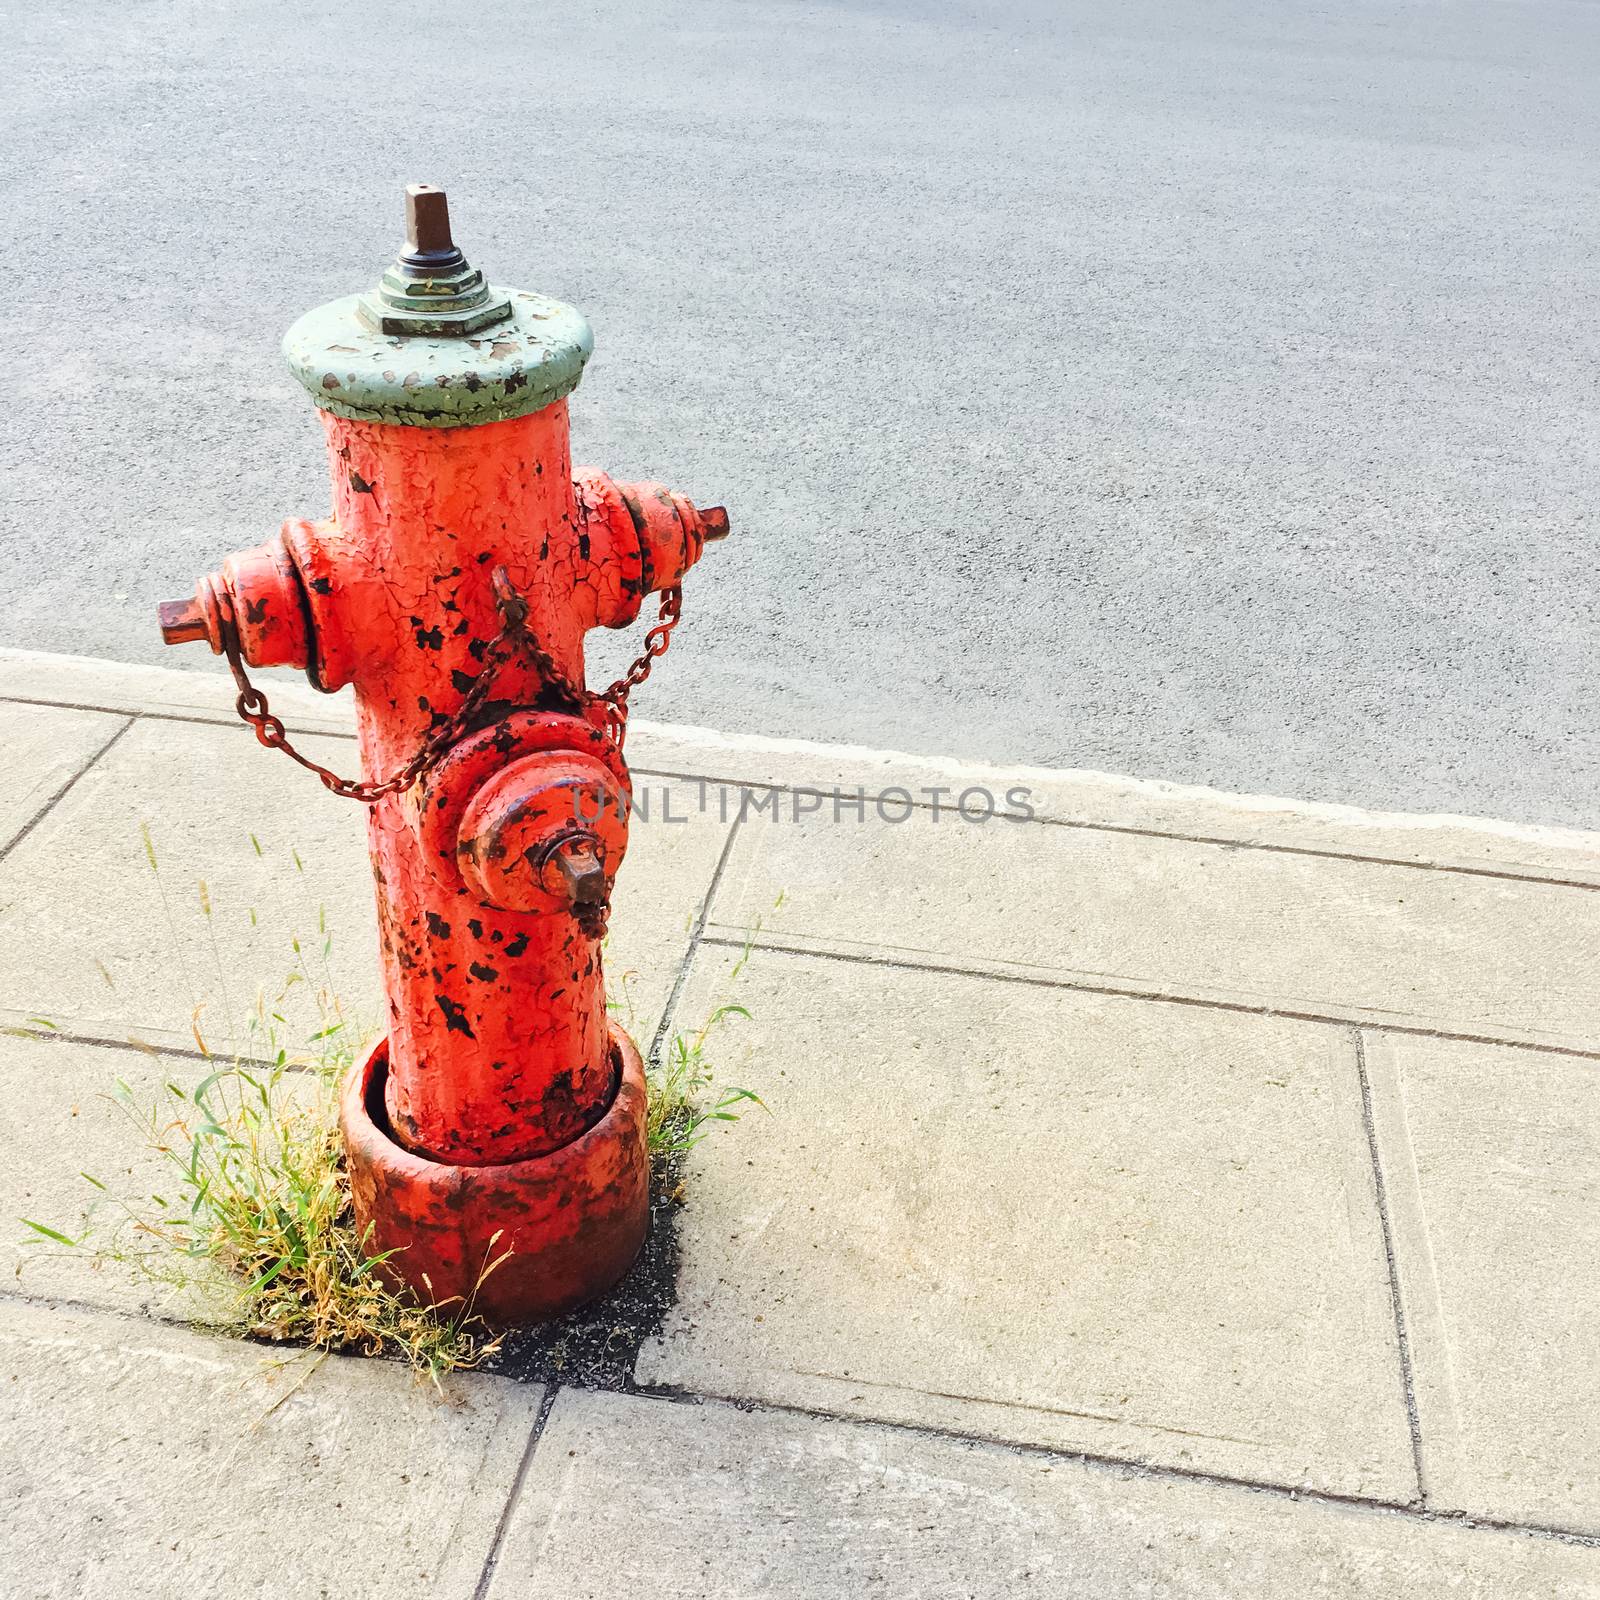 Red fire hydrant on urban street by anikasalsera